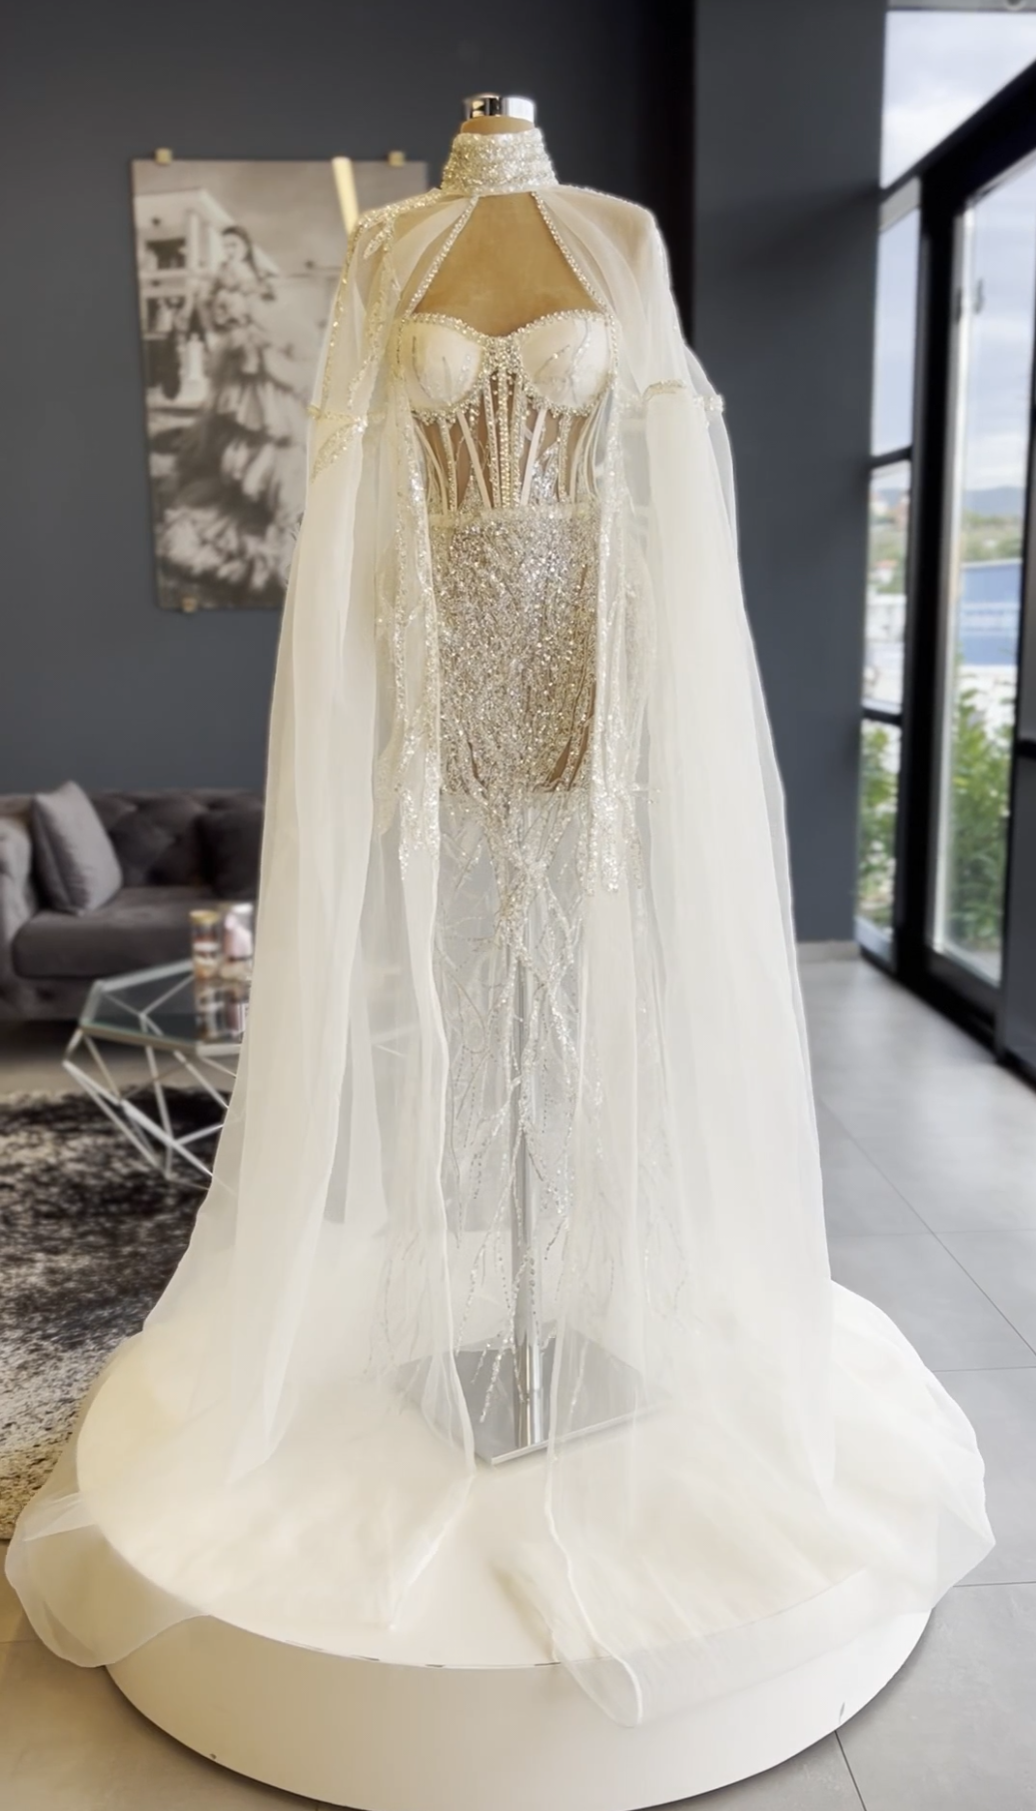 Glittery Wedding Gown & Cape